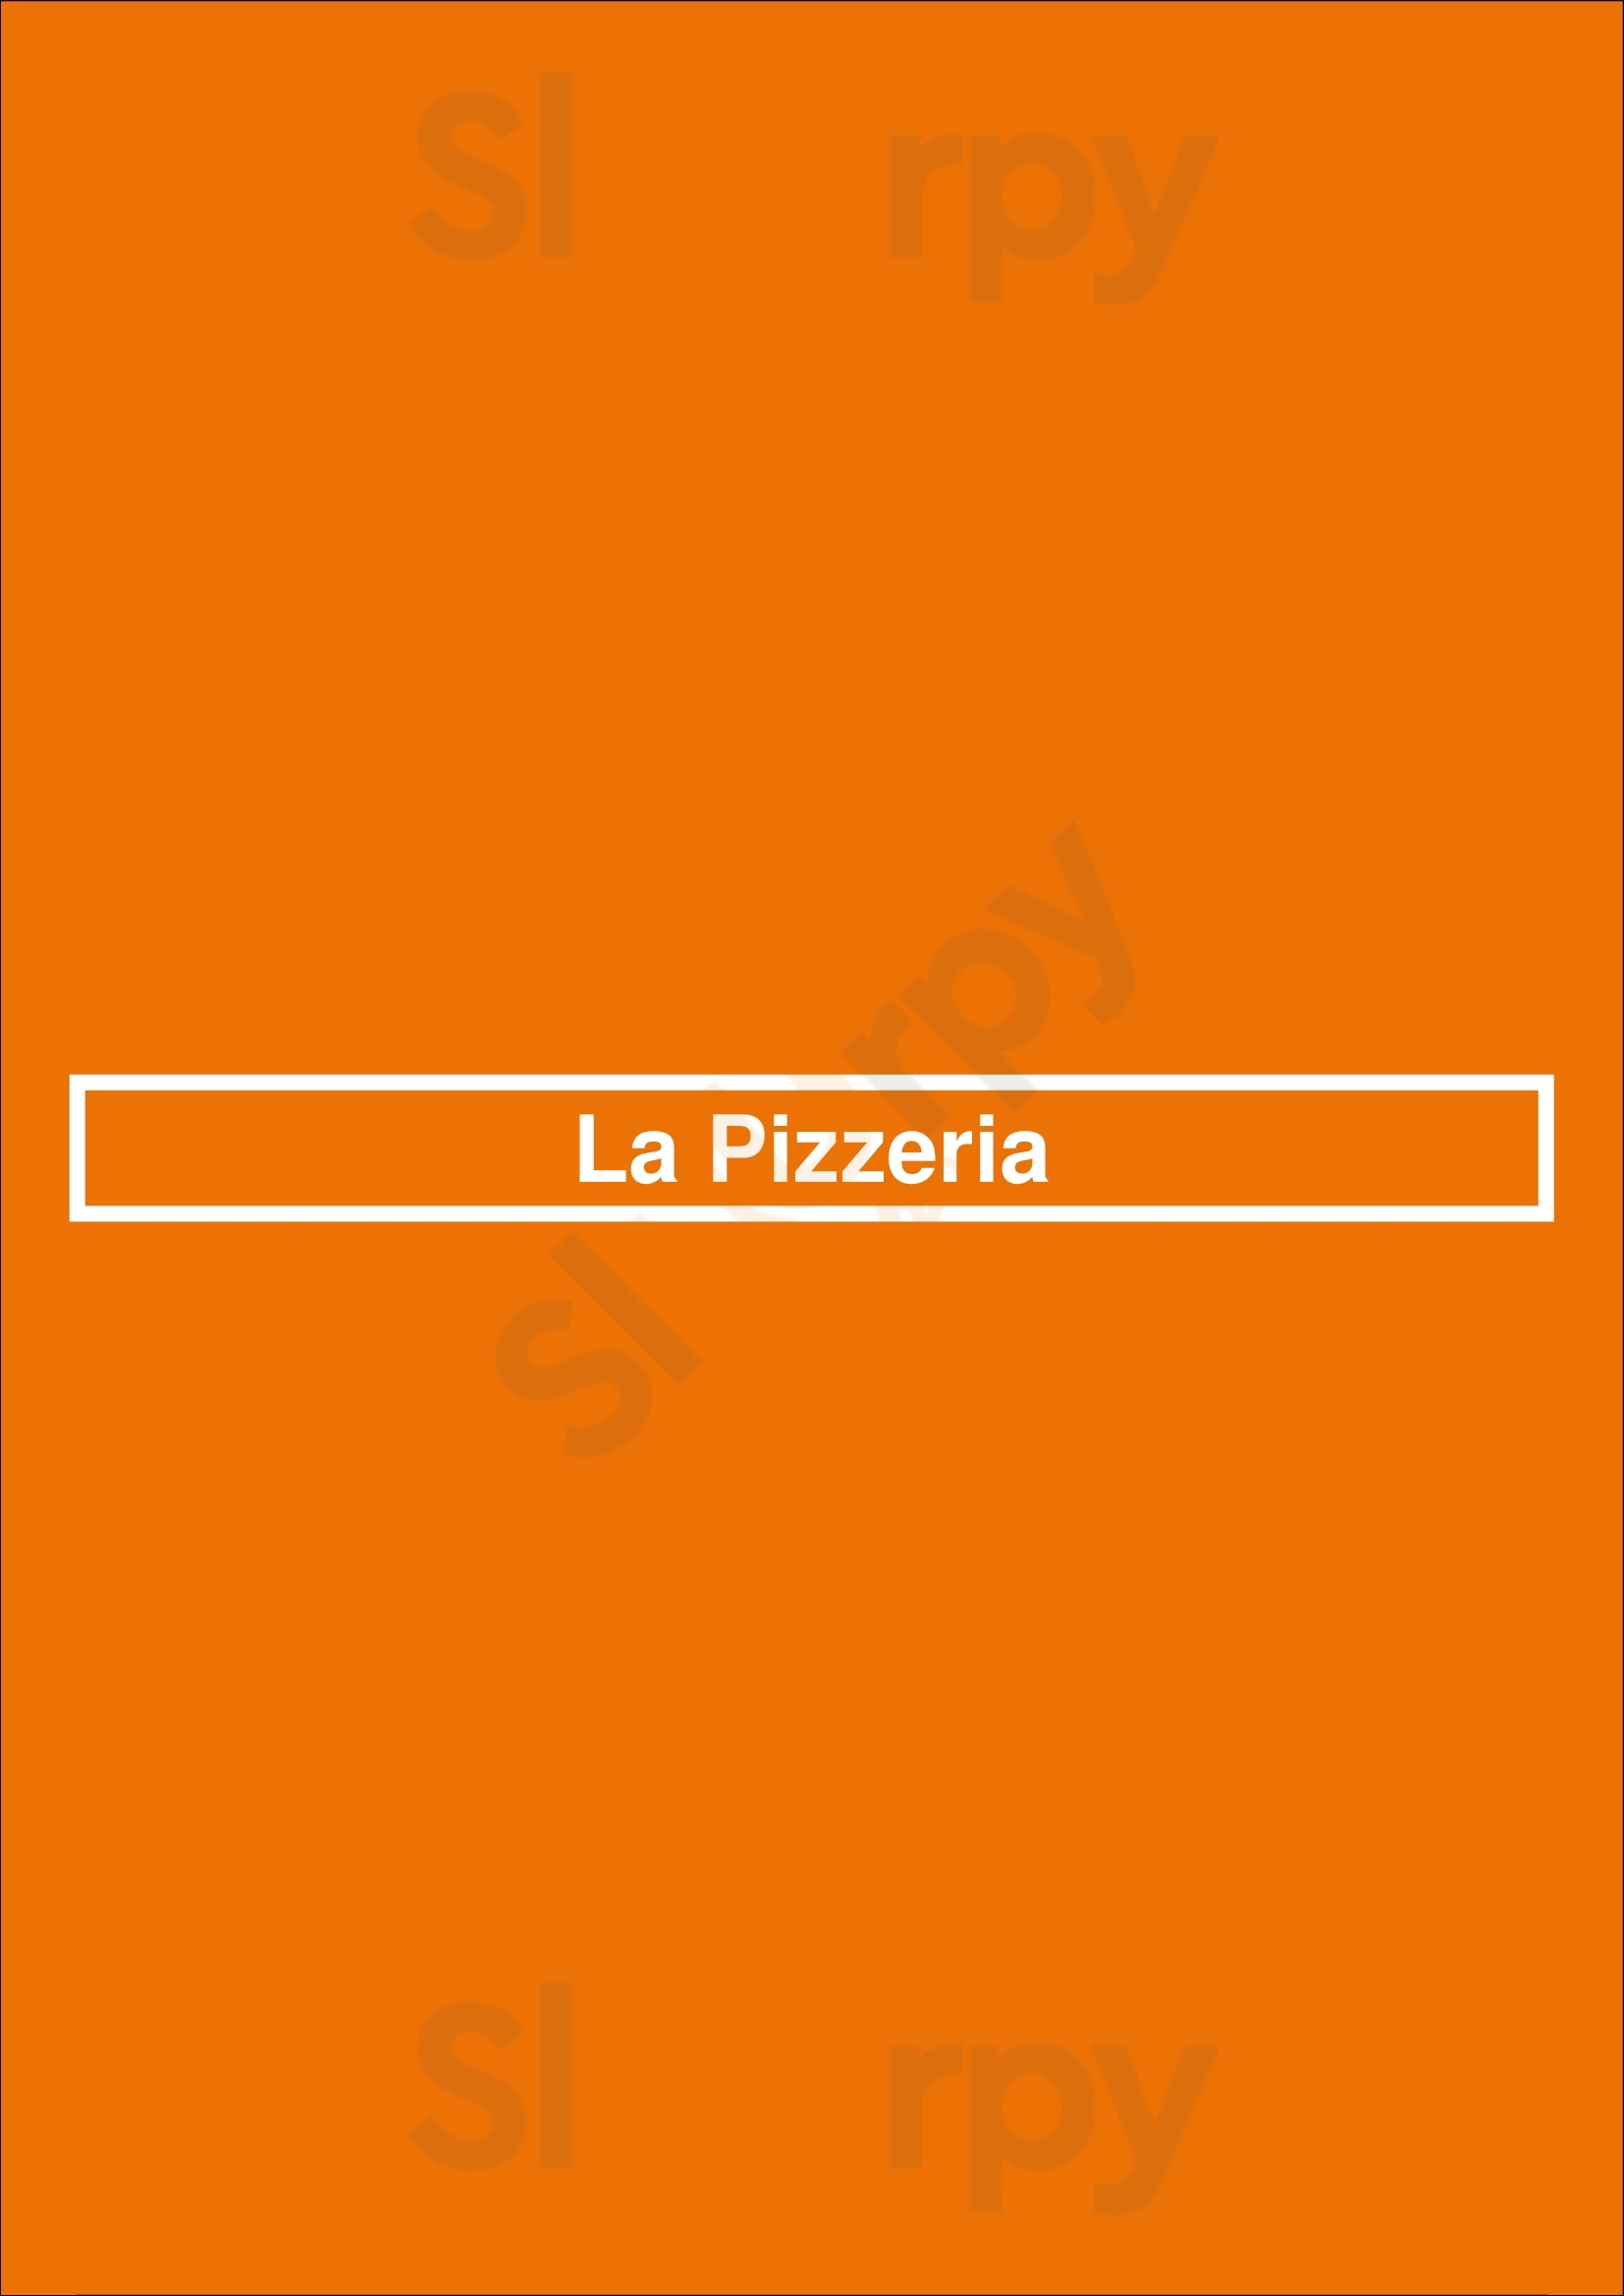 La Pizzeria Cleveland Menu - 1